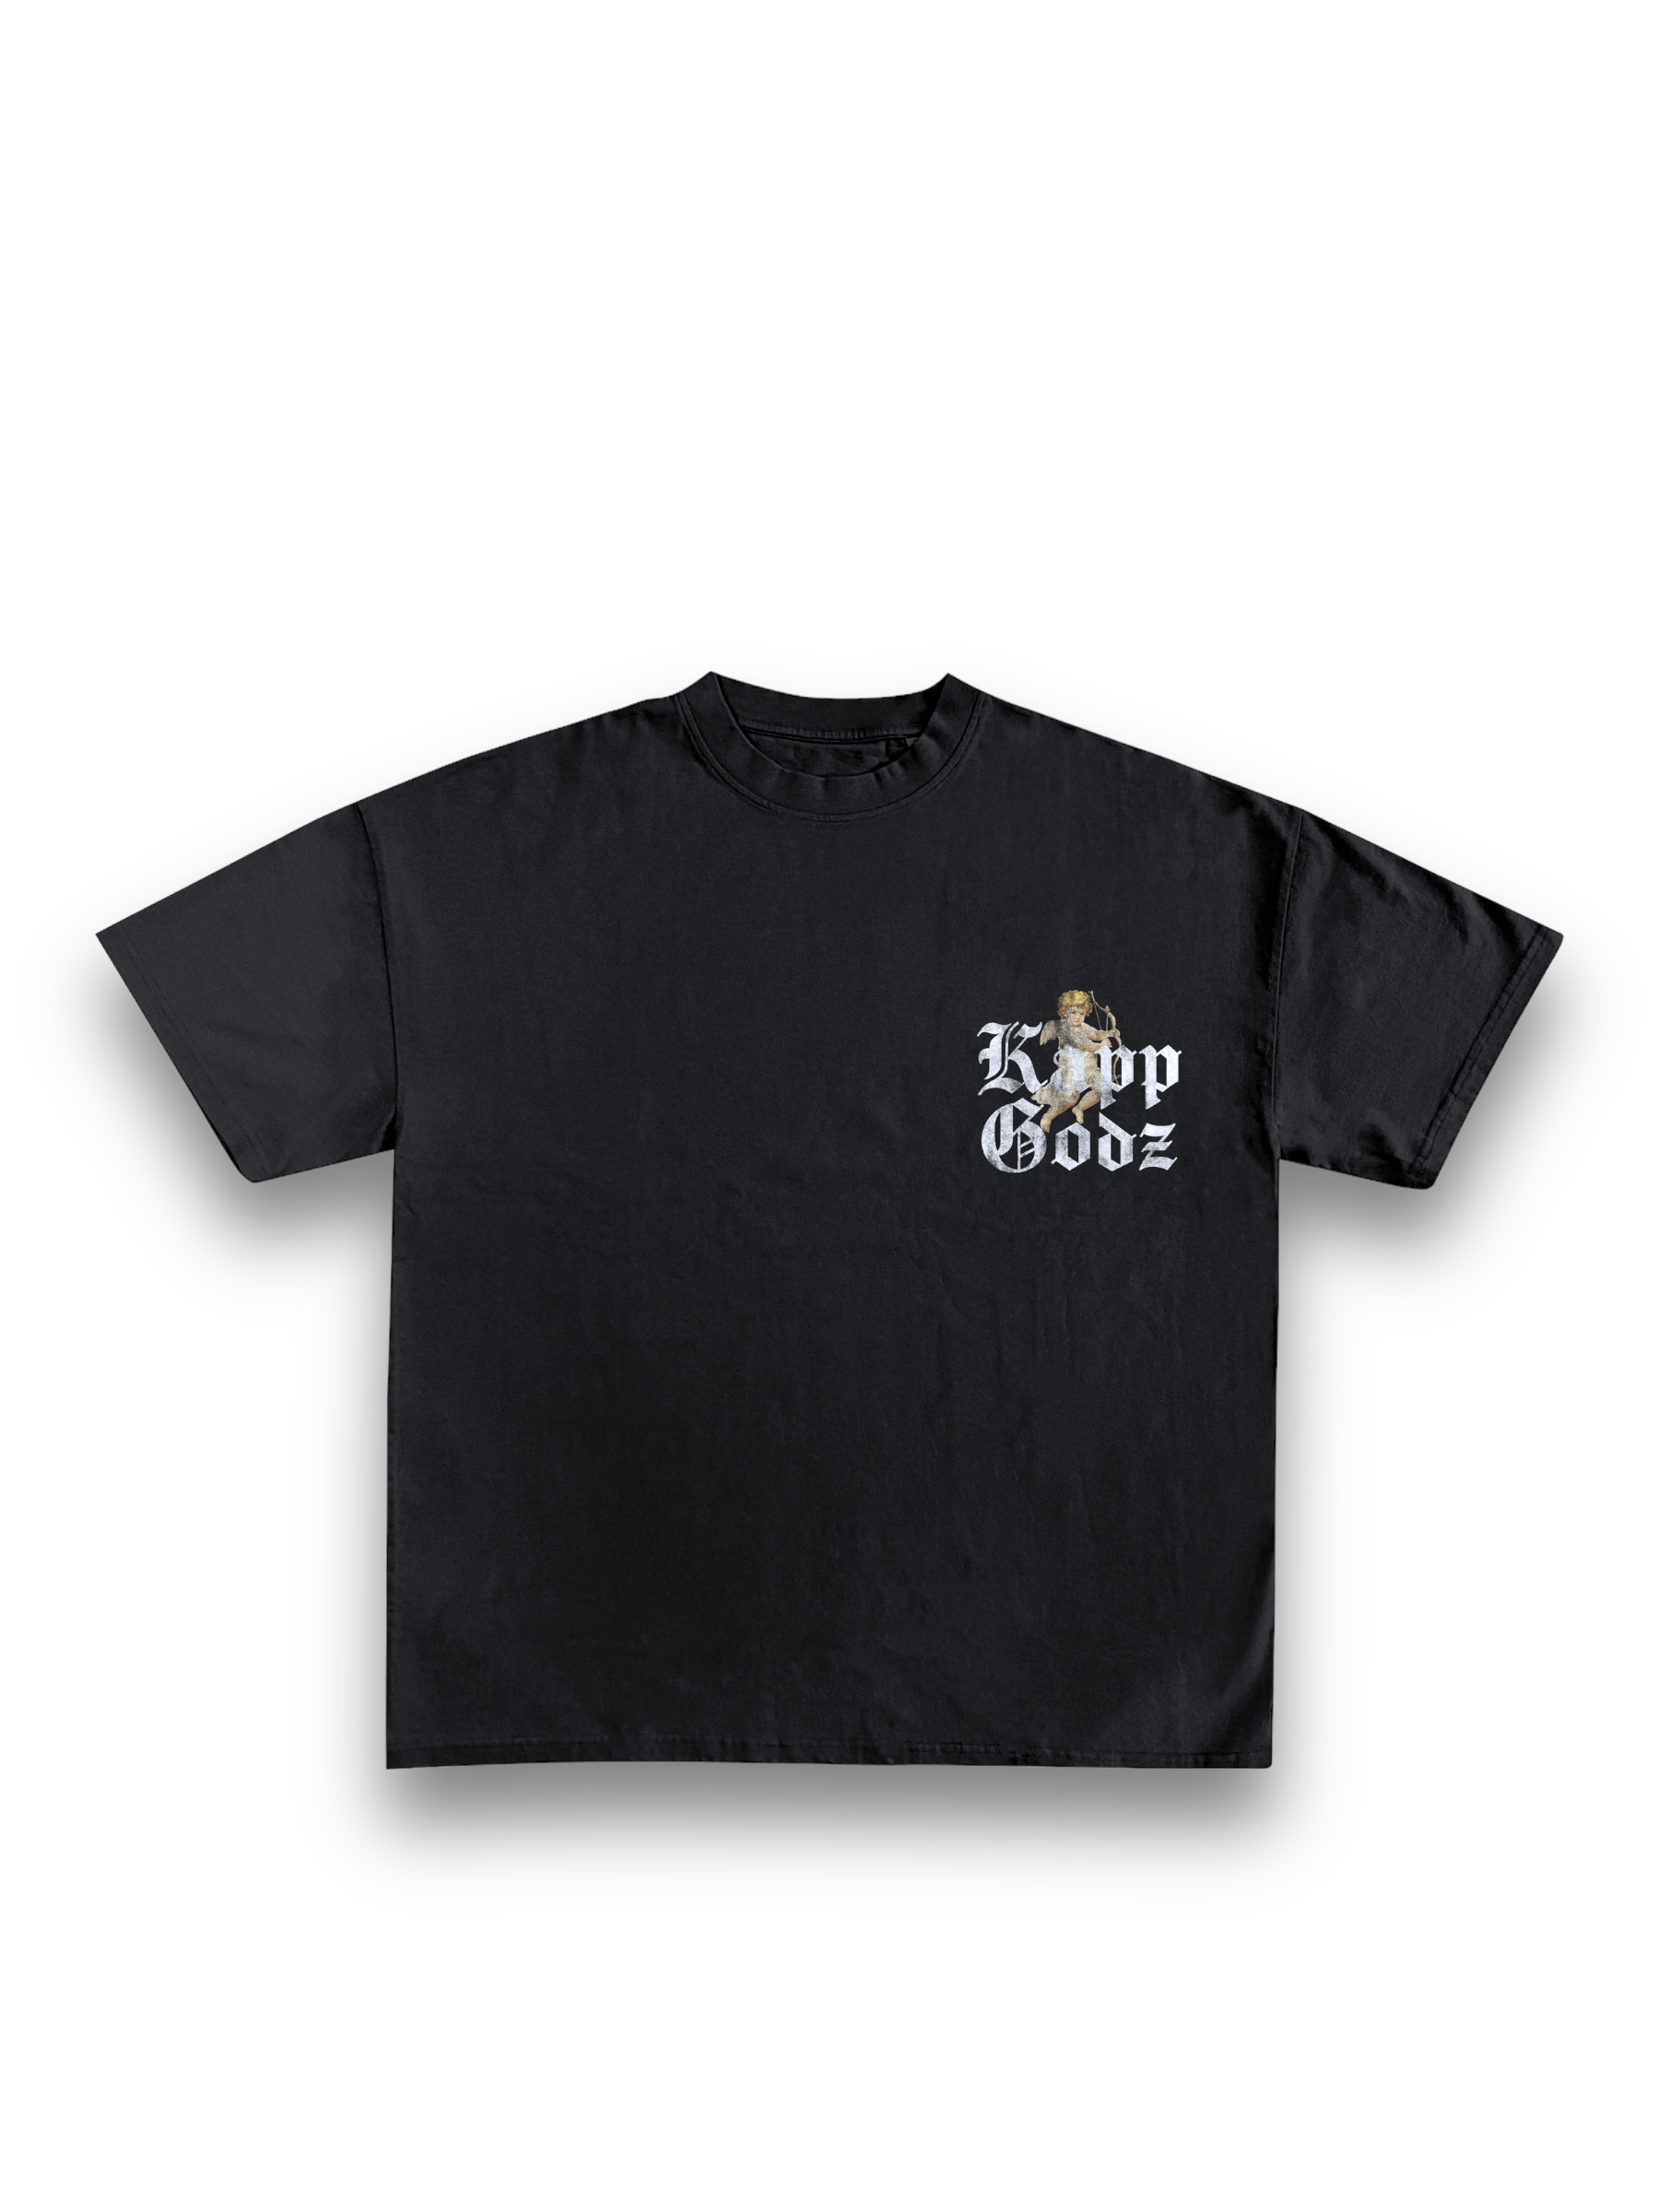 KappGodz Cruel Love T-shirt- Black - KappGodz Apparel